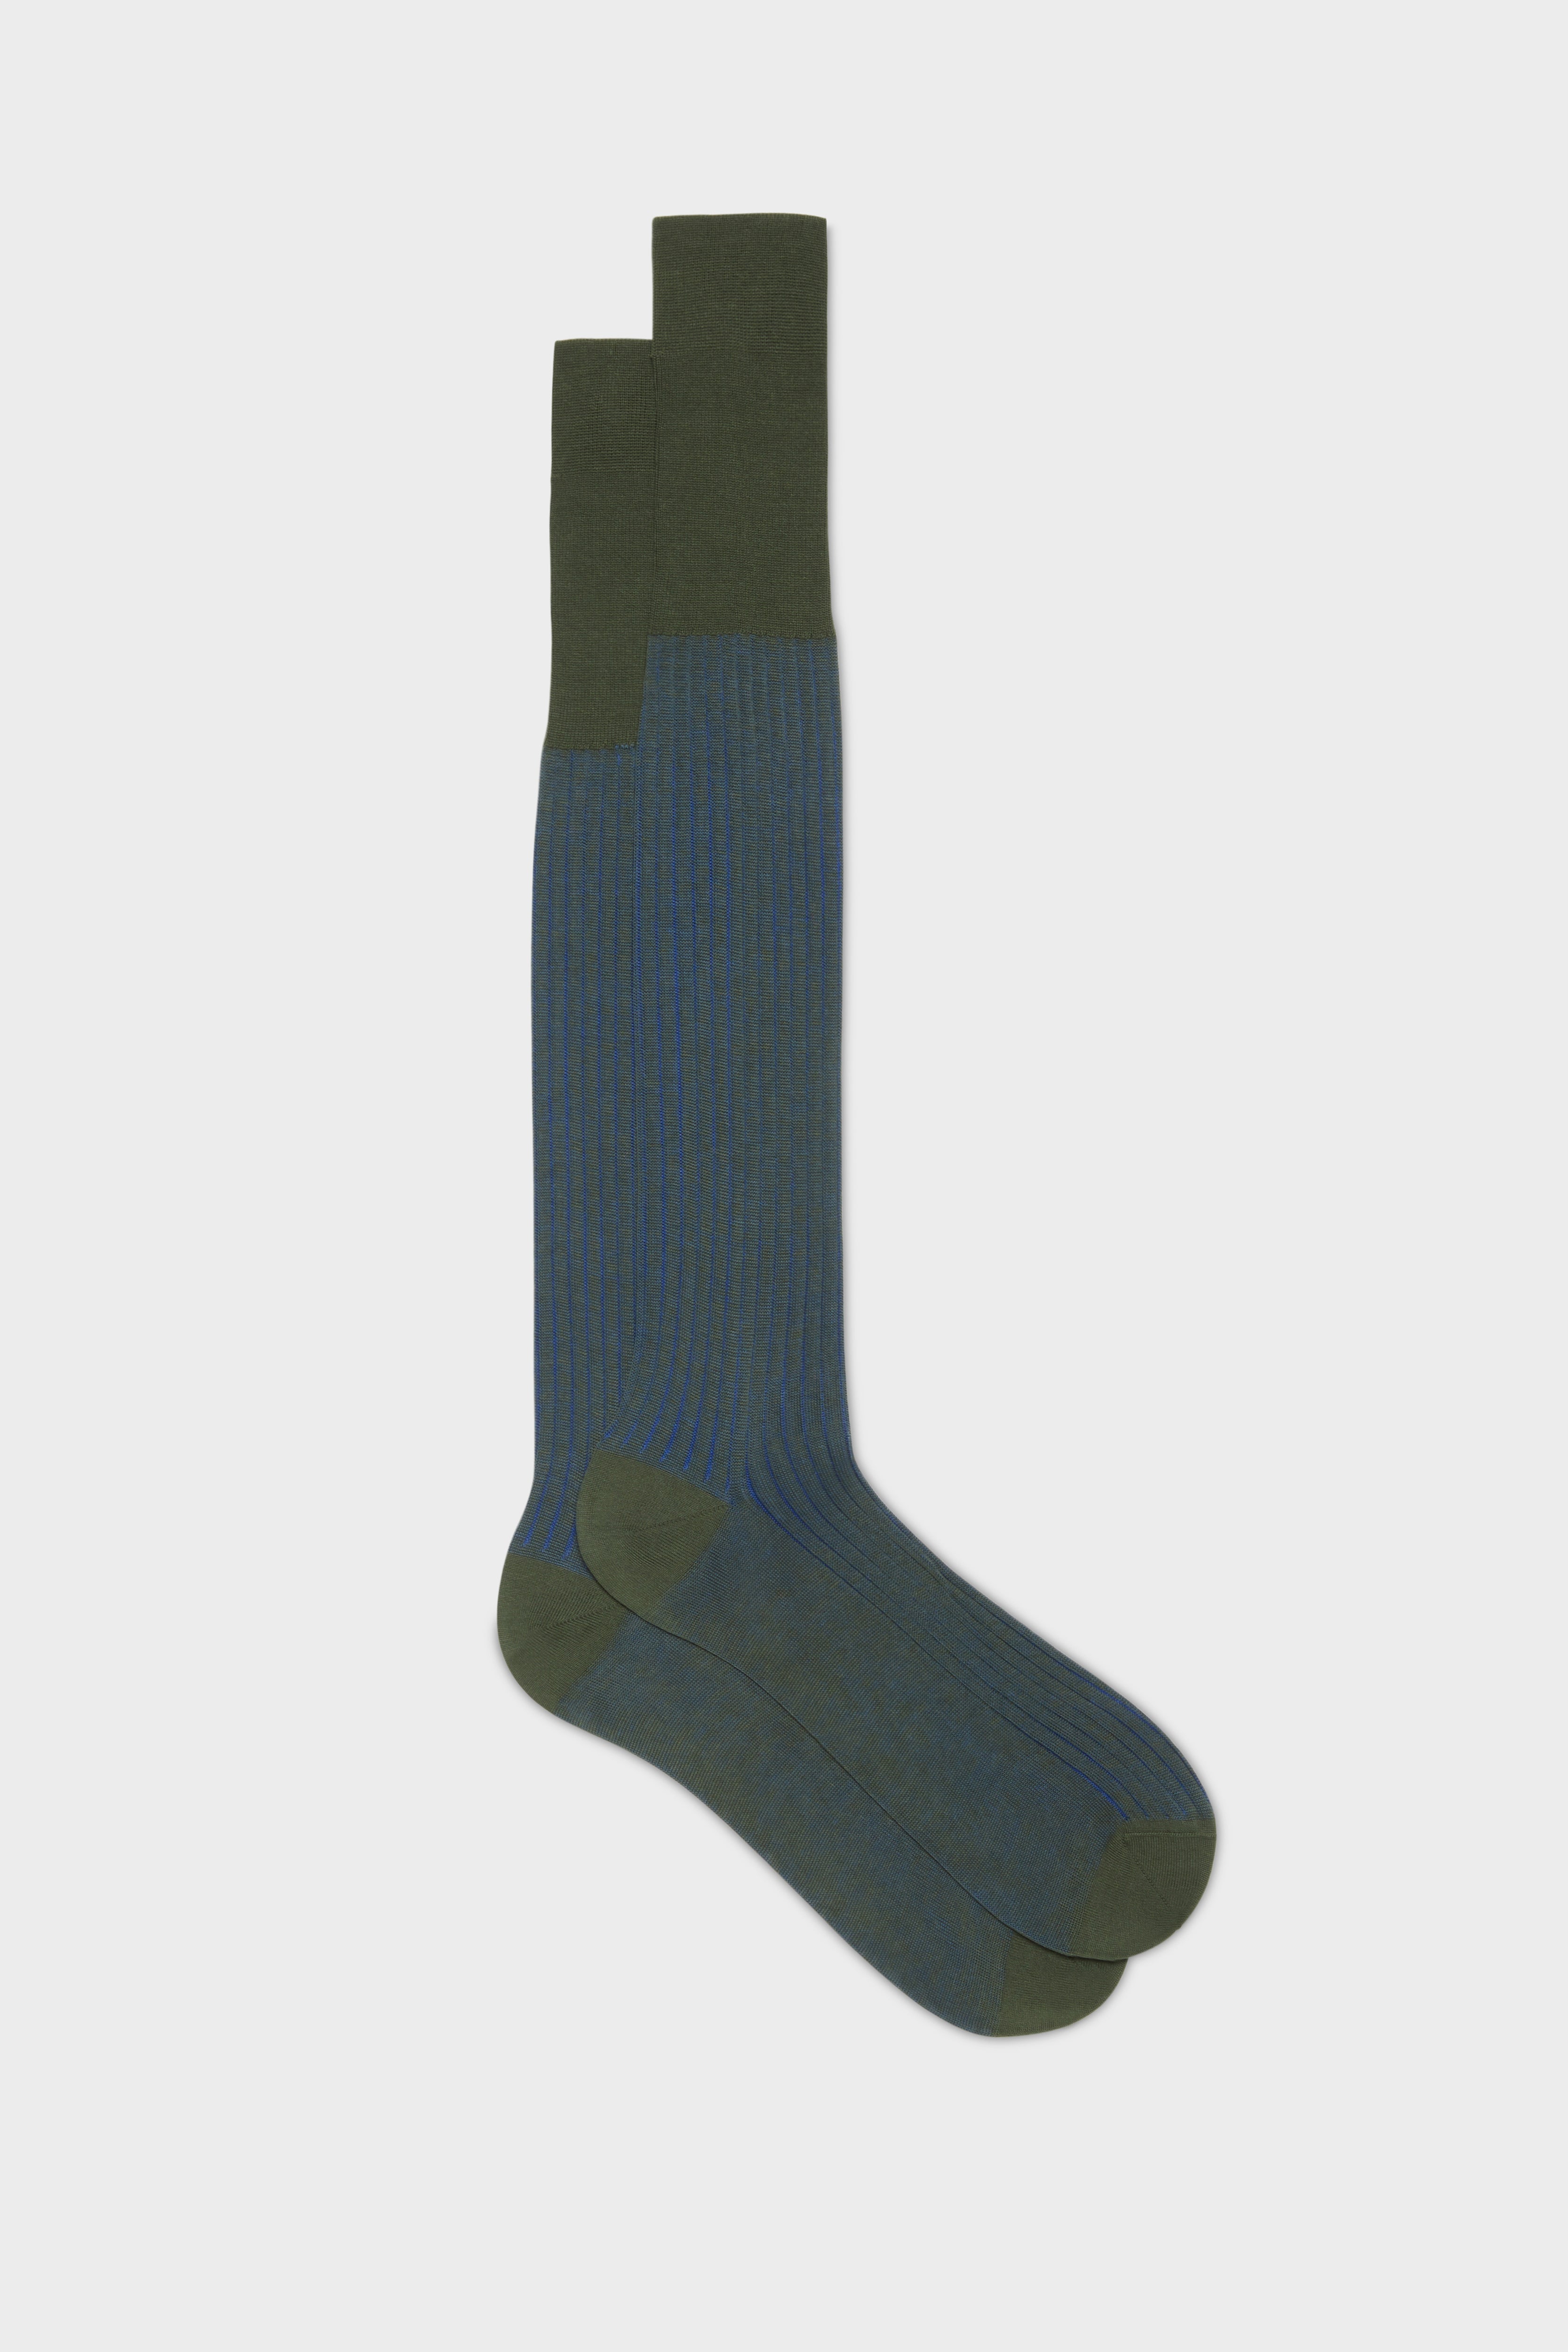 BRESCIANI - men's socks: Mario style. Cotton. Dark Green Royal ...